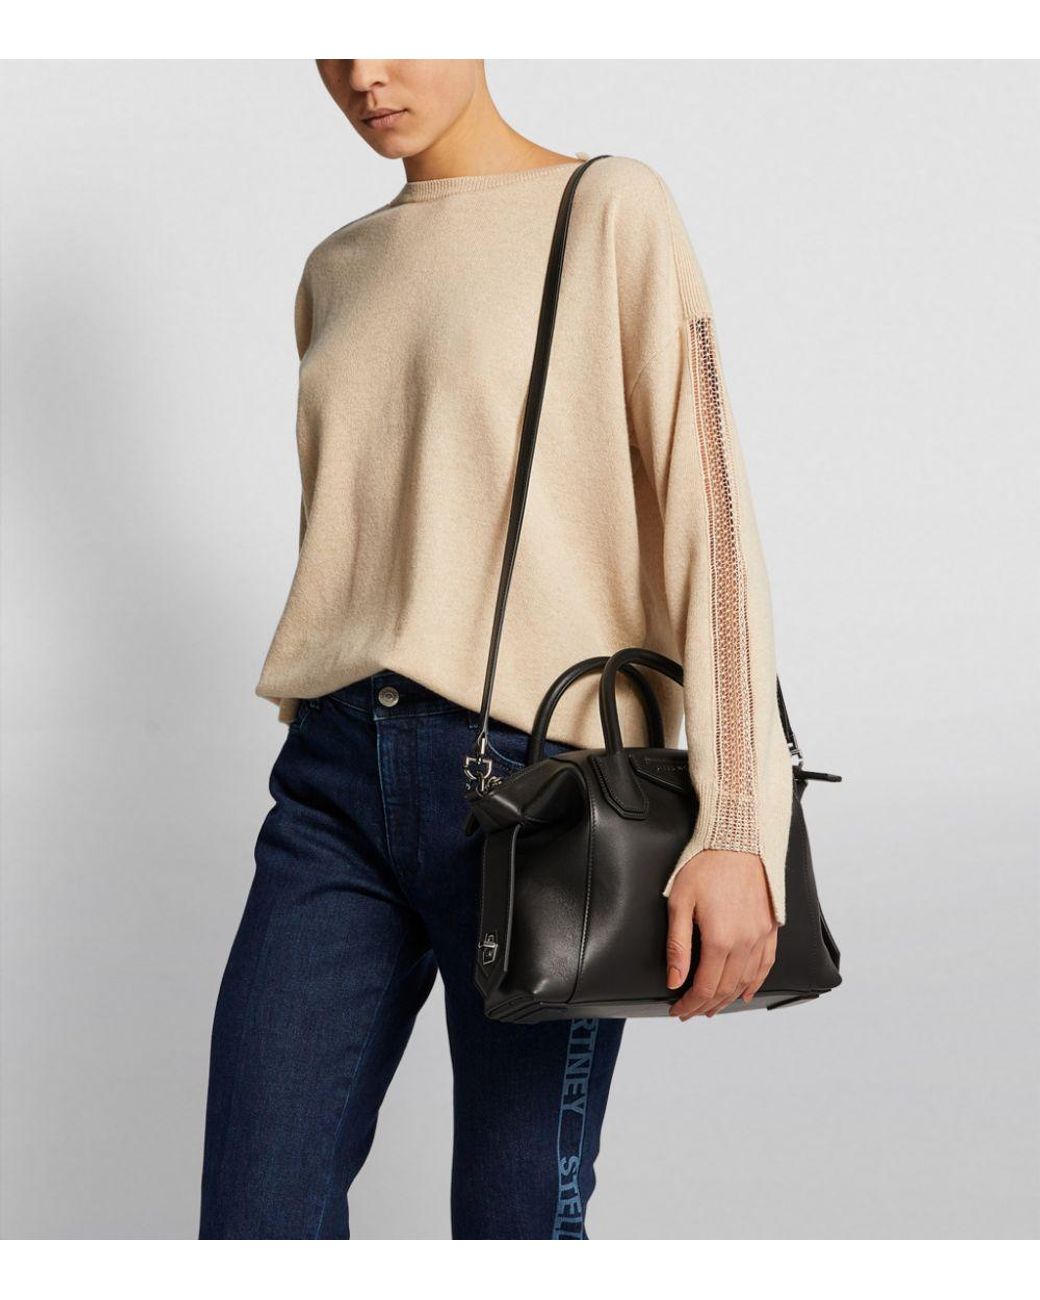 Givenchy Antigona Soft Small Leather Bag